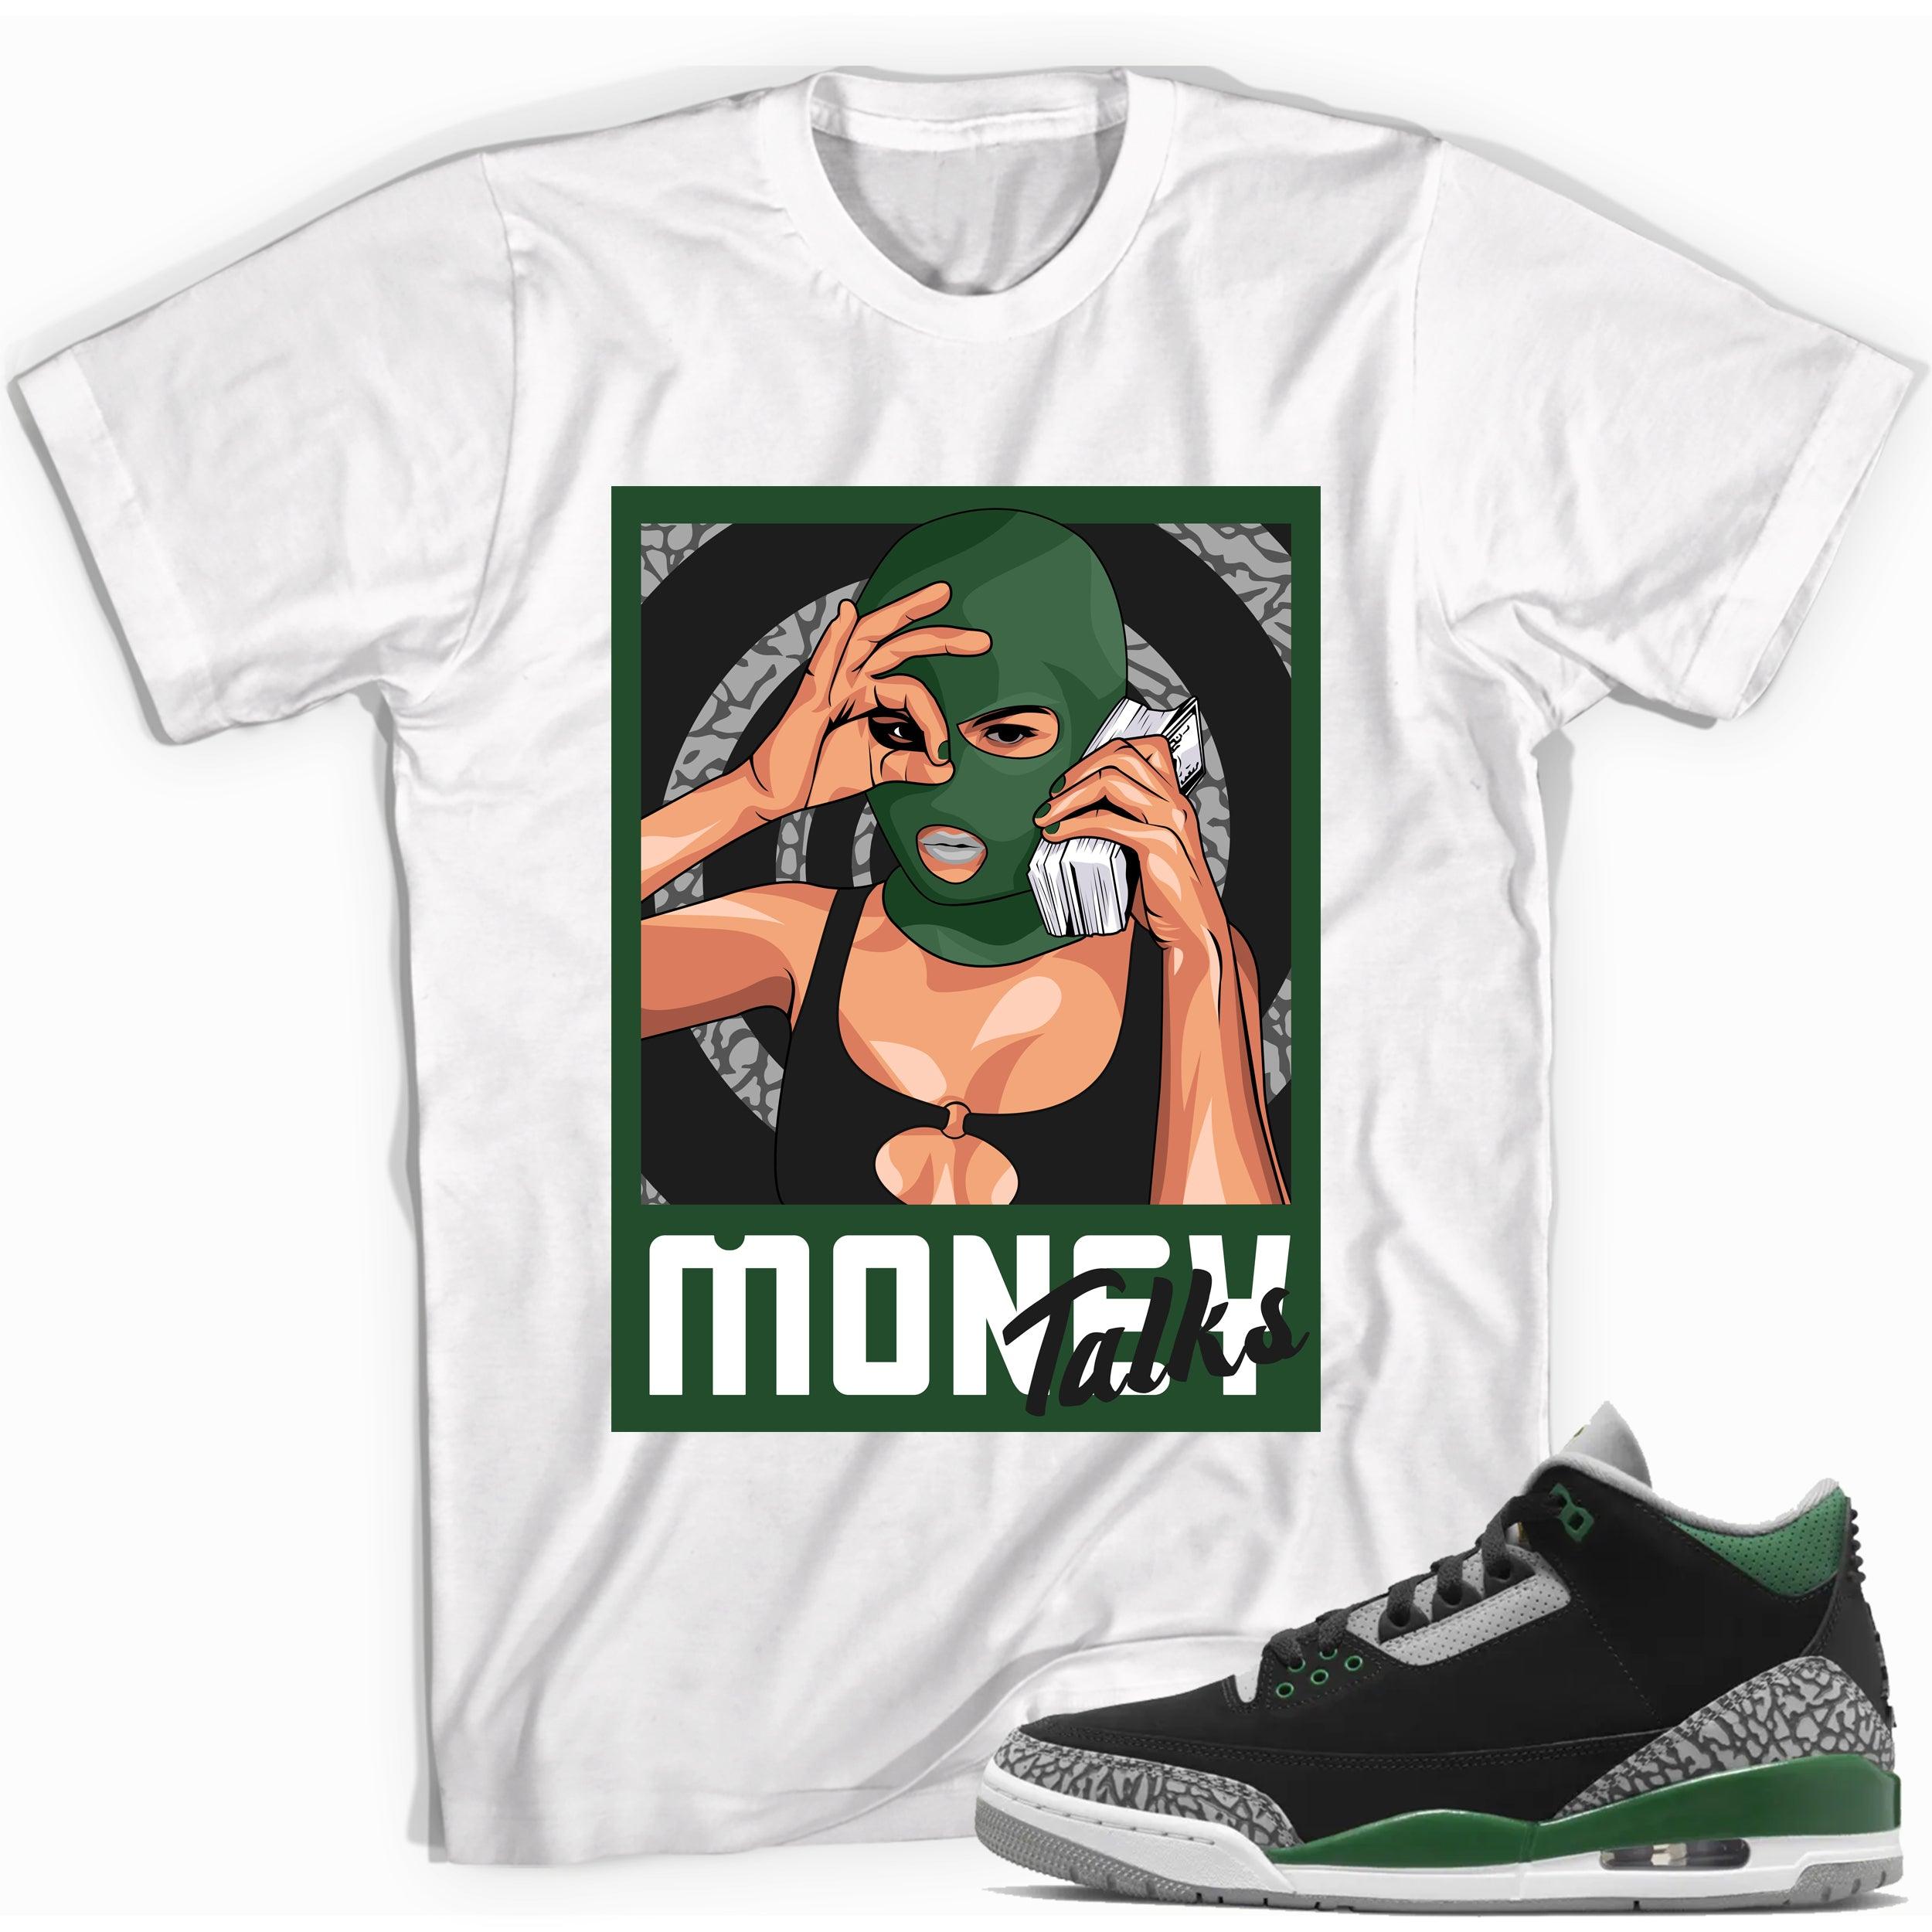 Money Talks Shirt Jordan 3 Pine Green photo